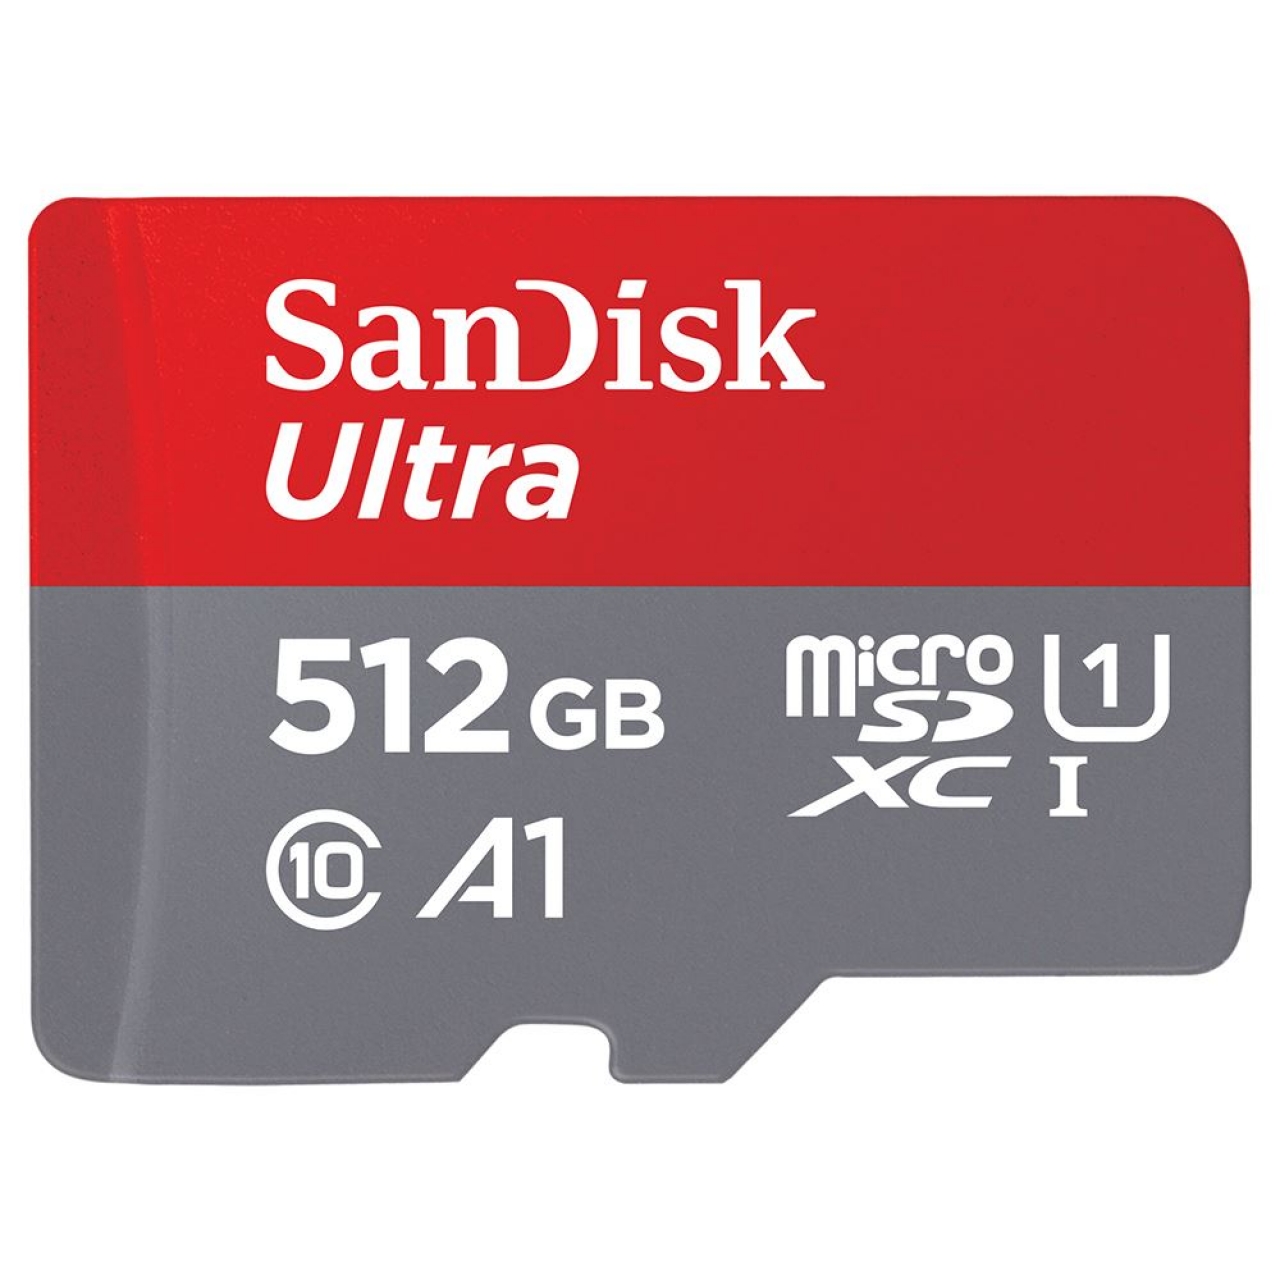 SANDISK 512GB ULTRA SDSQUA4-512G-GN6MN Micro SD